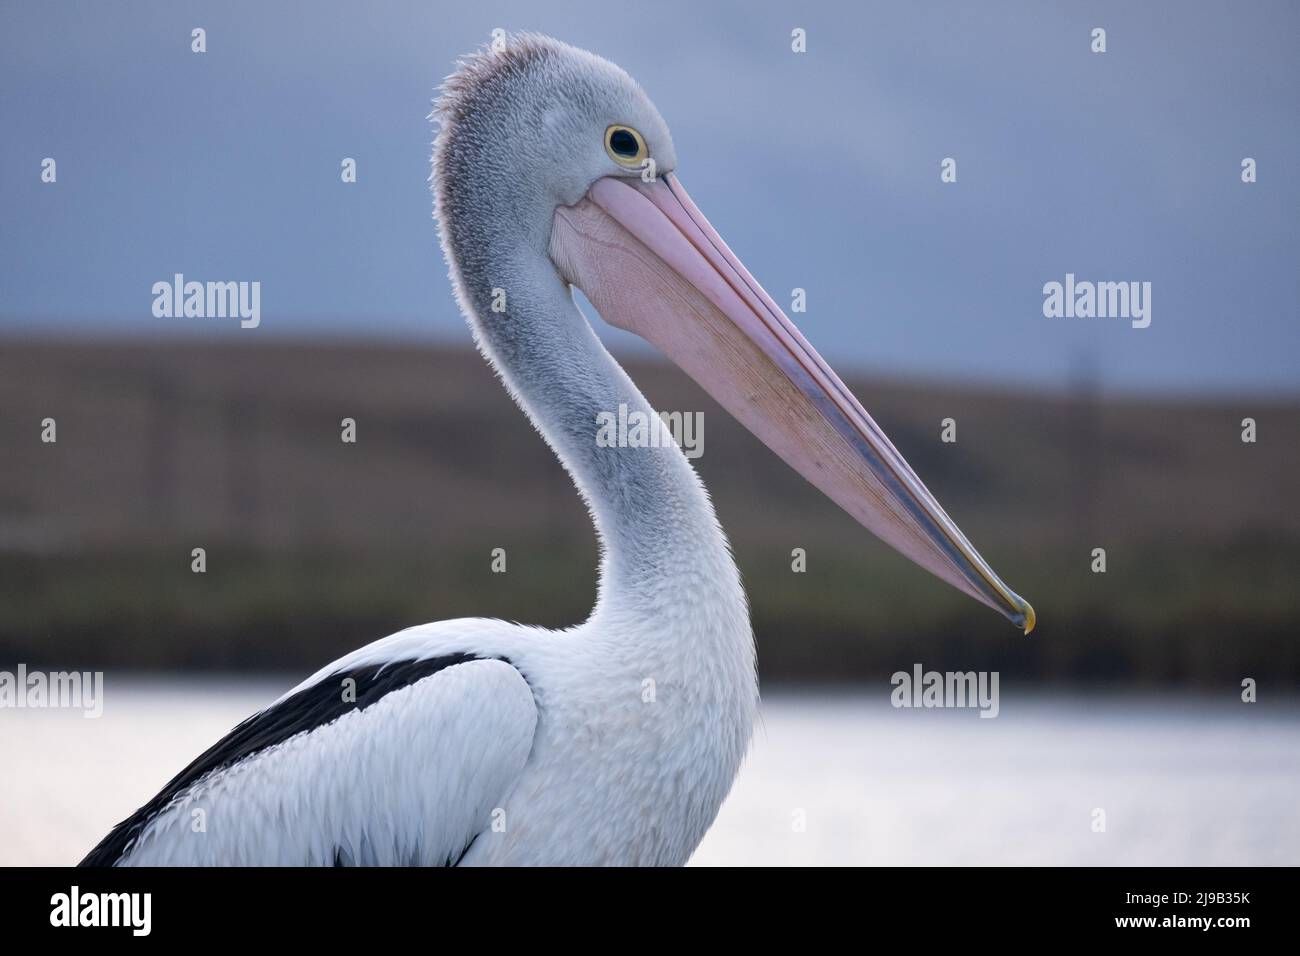 An Australian Pelican posing Stock Photo